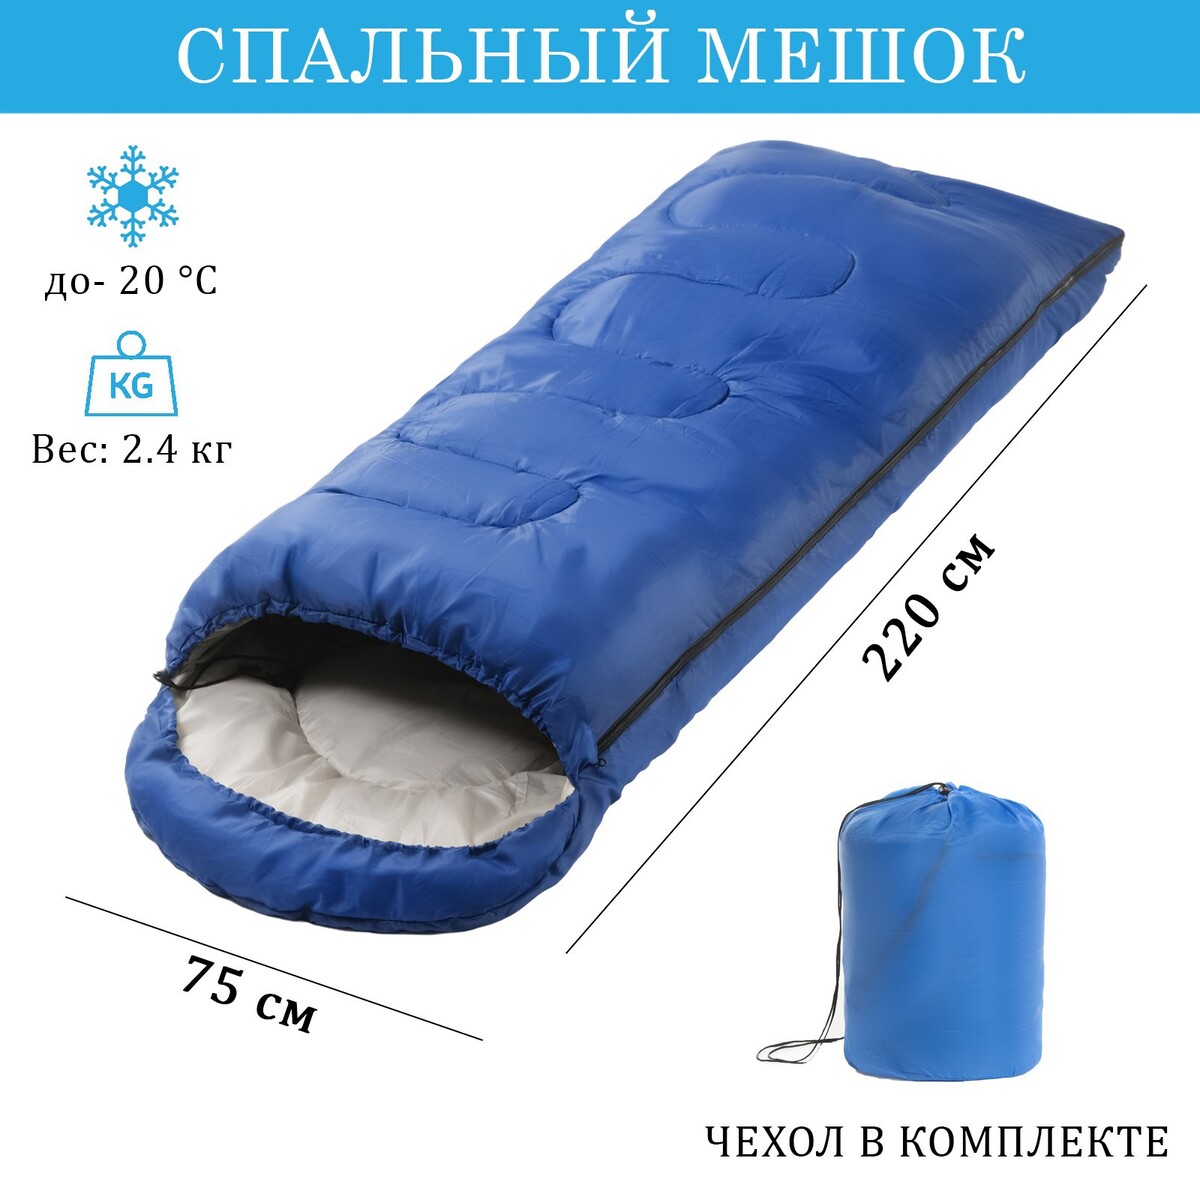 Спальный мешок туристический, 220 х 75 см, до -20 градусов, 700 г/м2, синий спальный мешок туристический atemi 200 г м2 12 c t12n